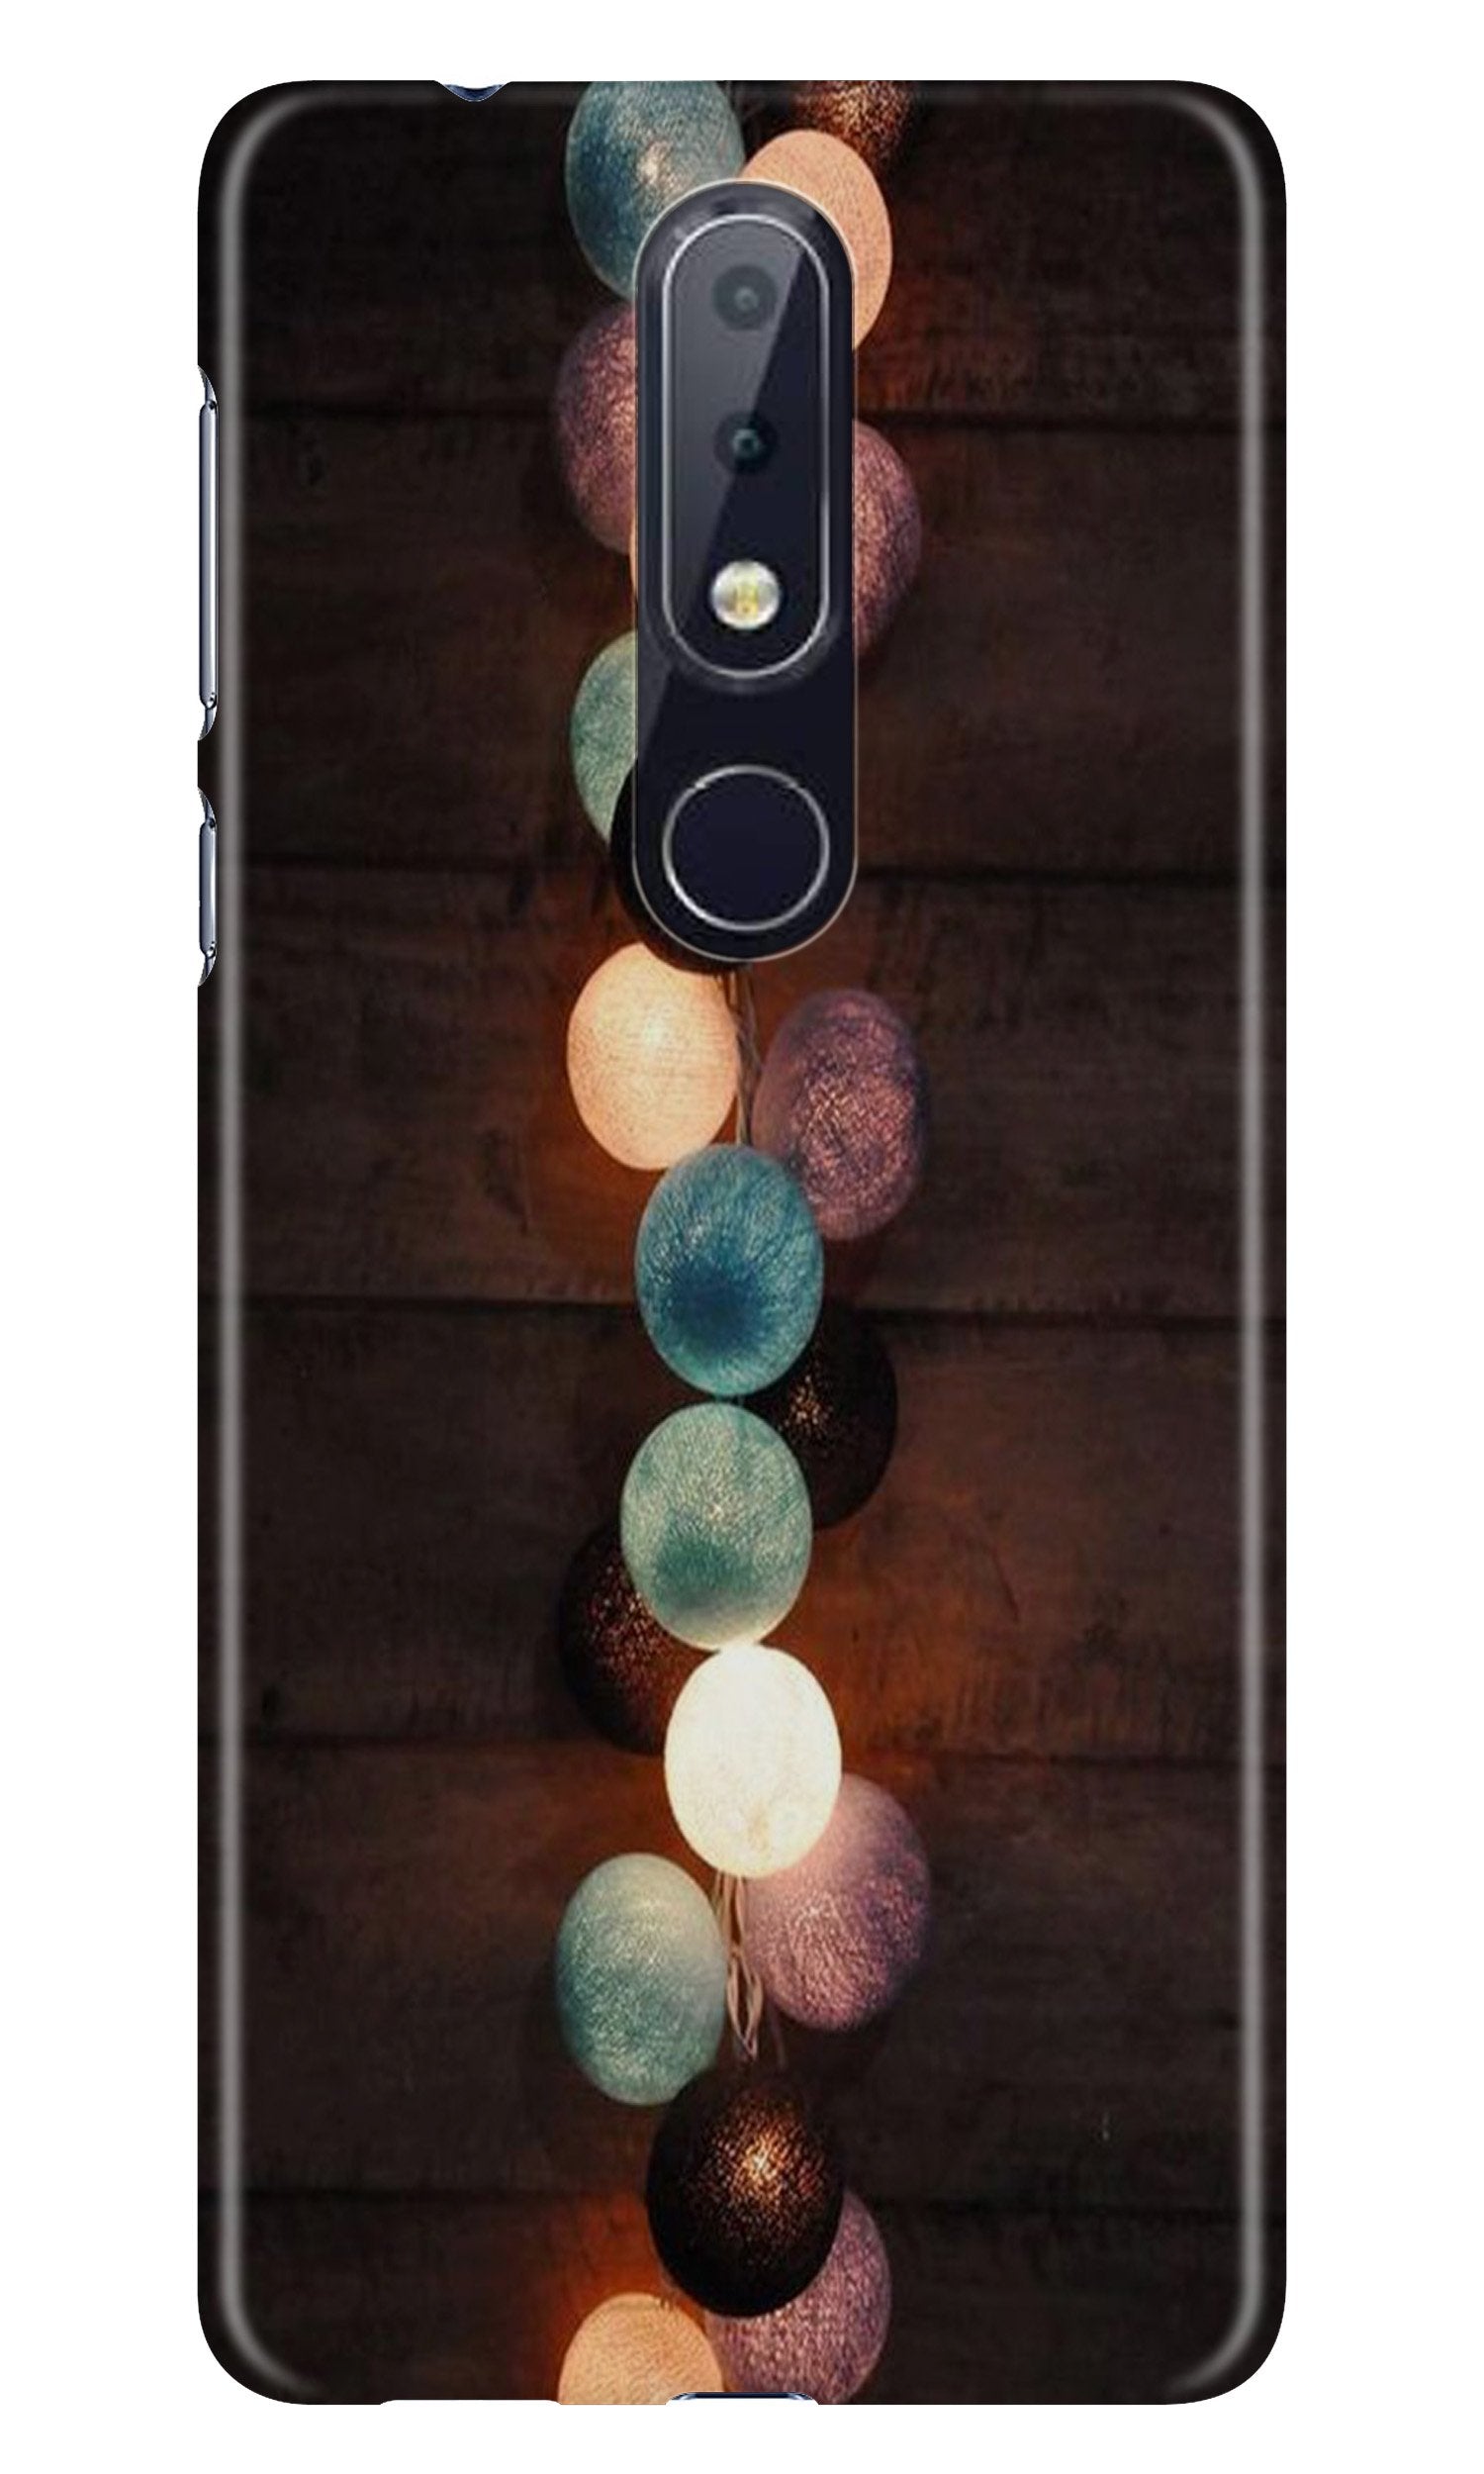 Party Lights Case for Nokia 7.1 (Design No. 209)